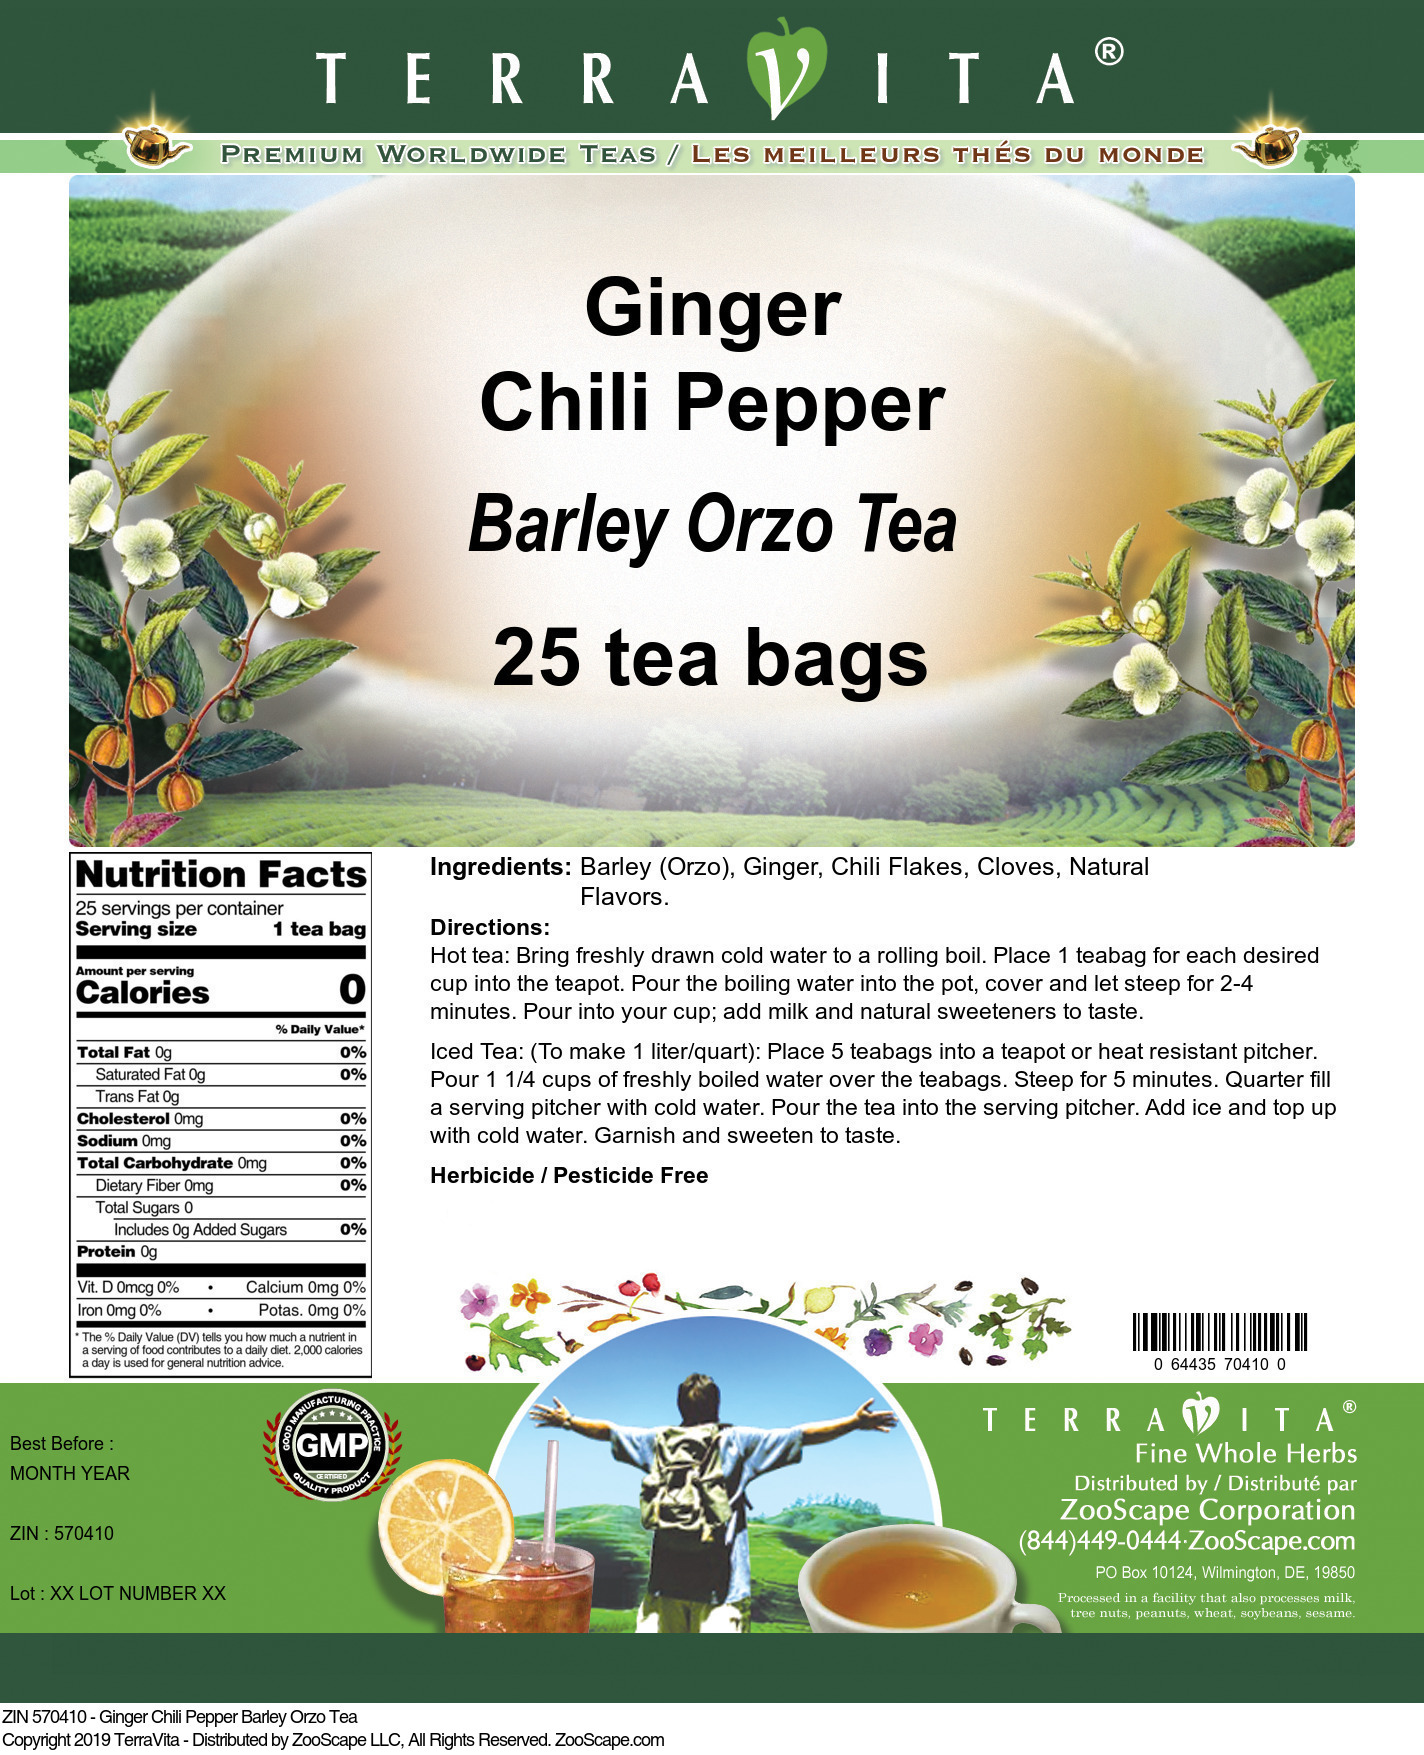 Ginger Chili Pepper Barley Orzo Tea - Label